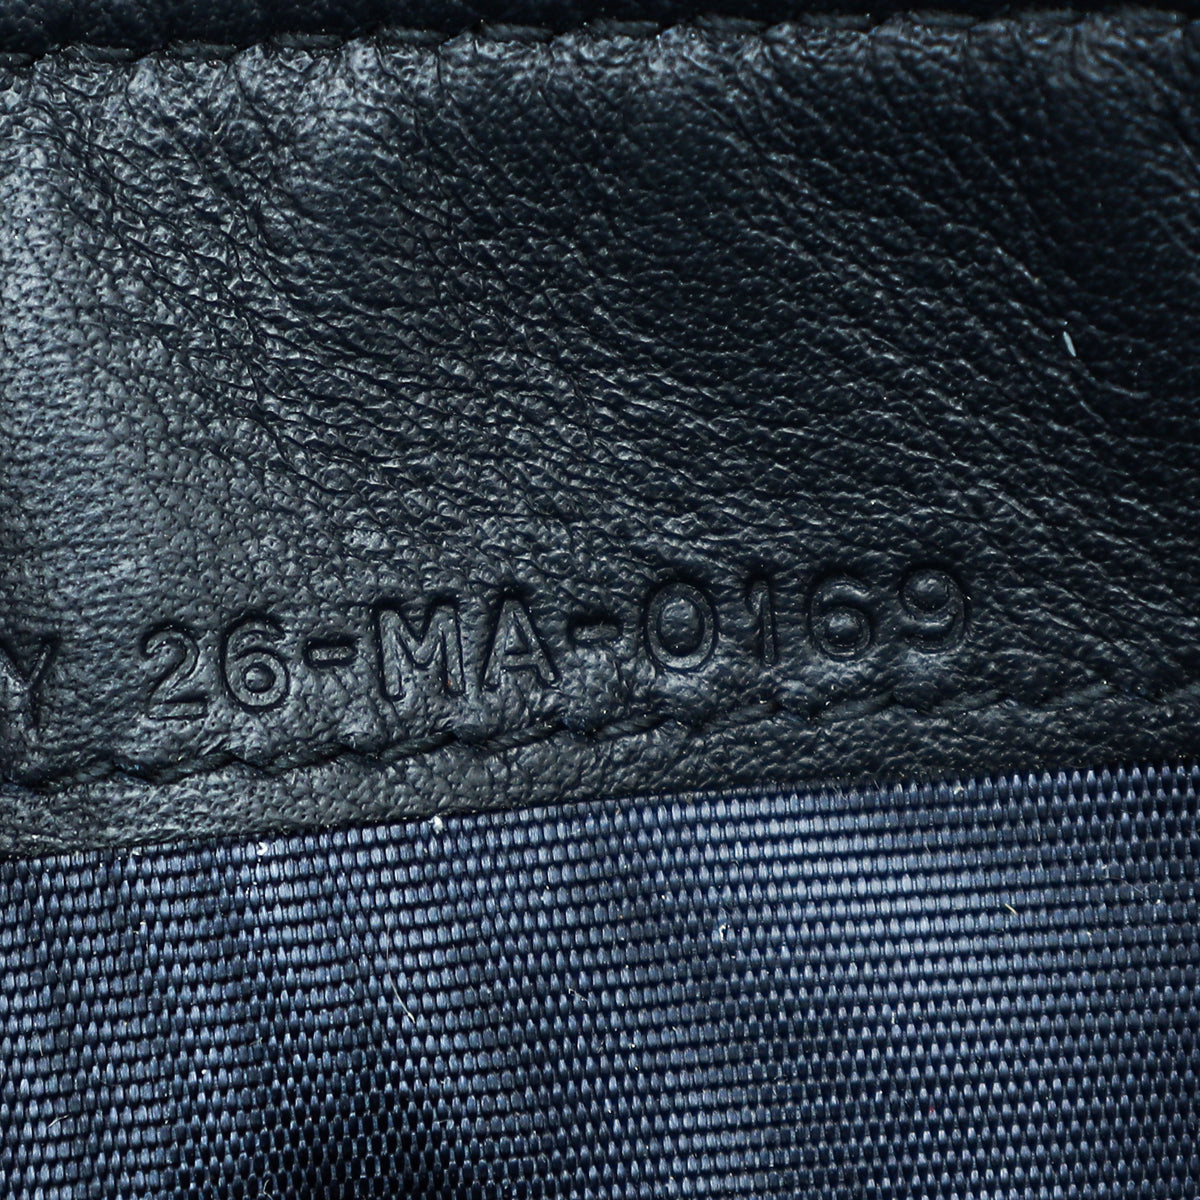 Christian Dior Navy Blue Oblique Zip Around Long Wallet